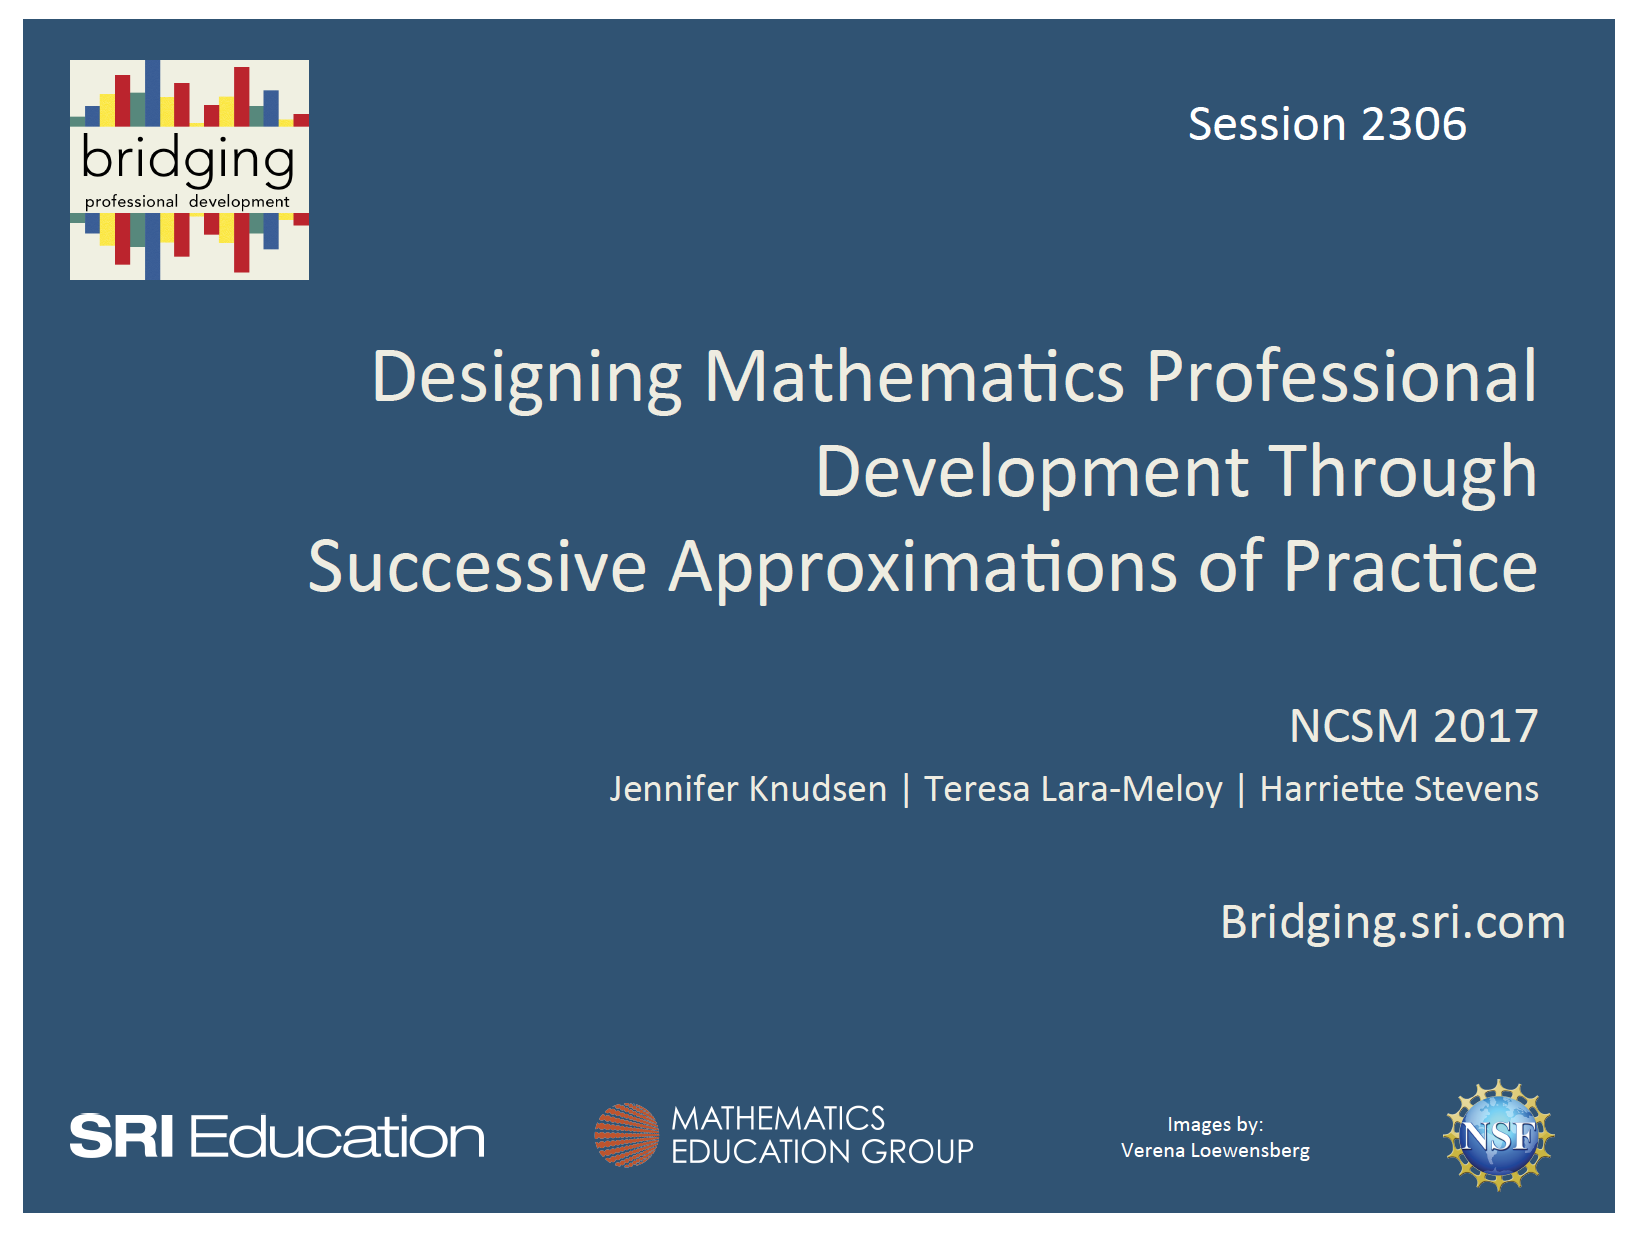 Designing Mathematics Professional Development Through Successive Approximations of Practice presentation cover